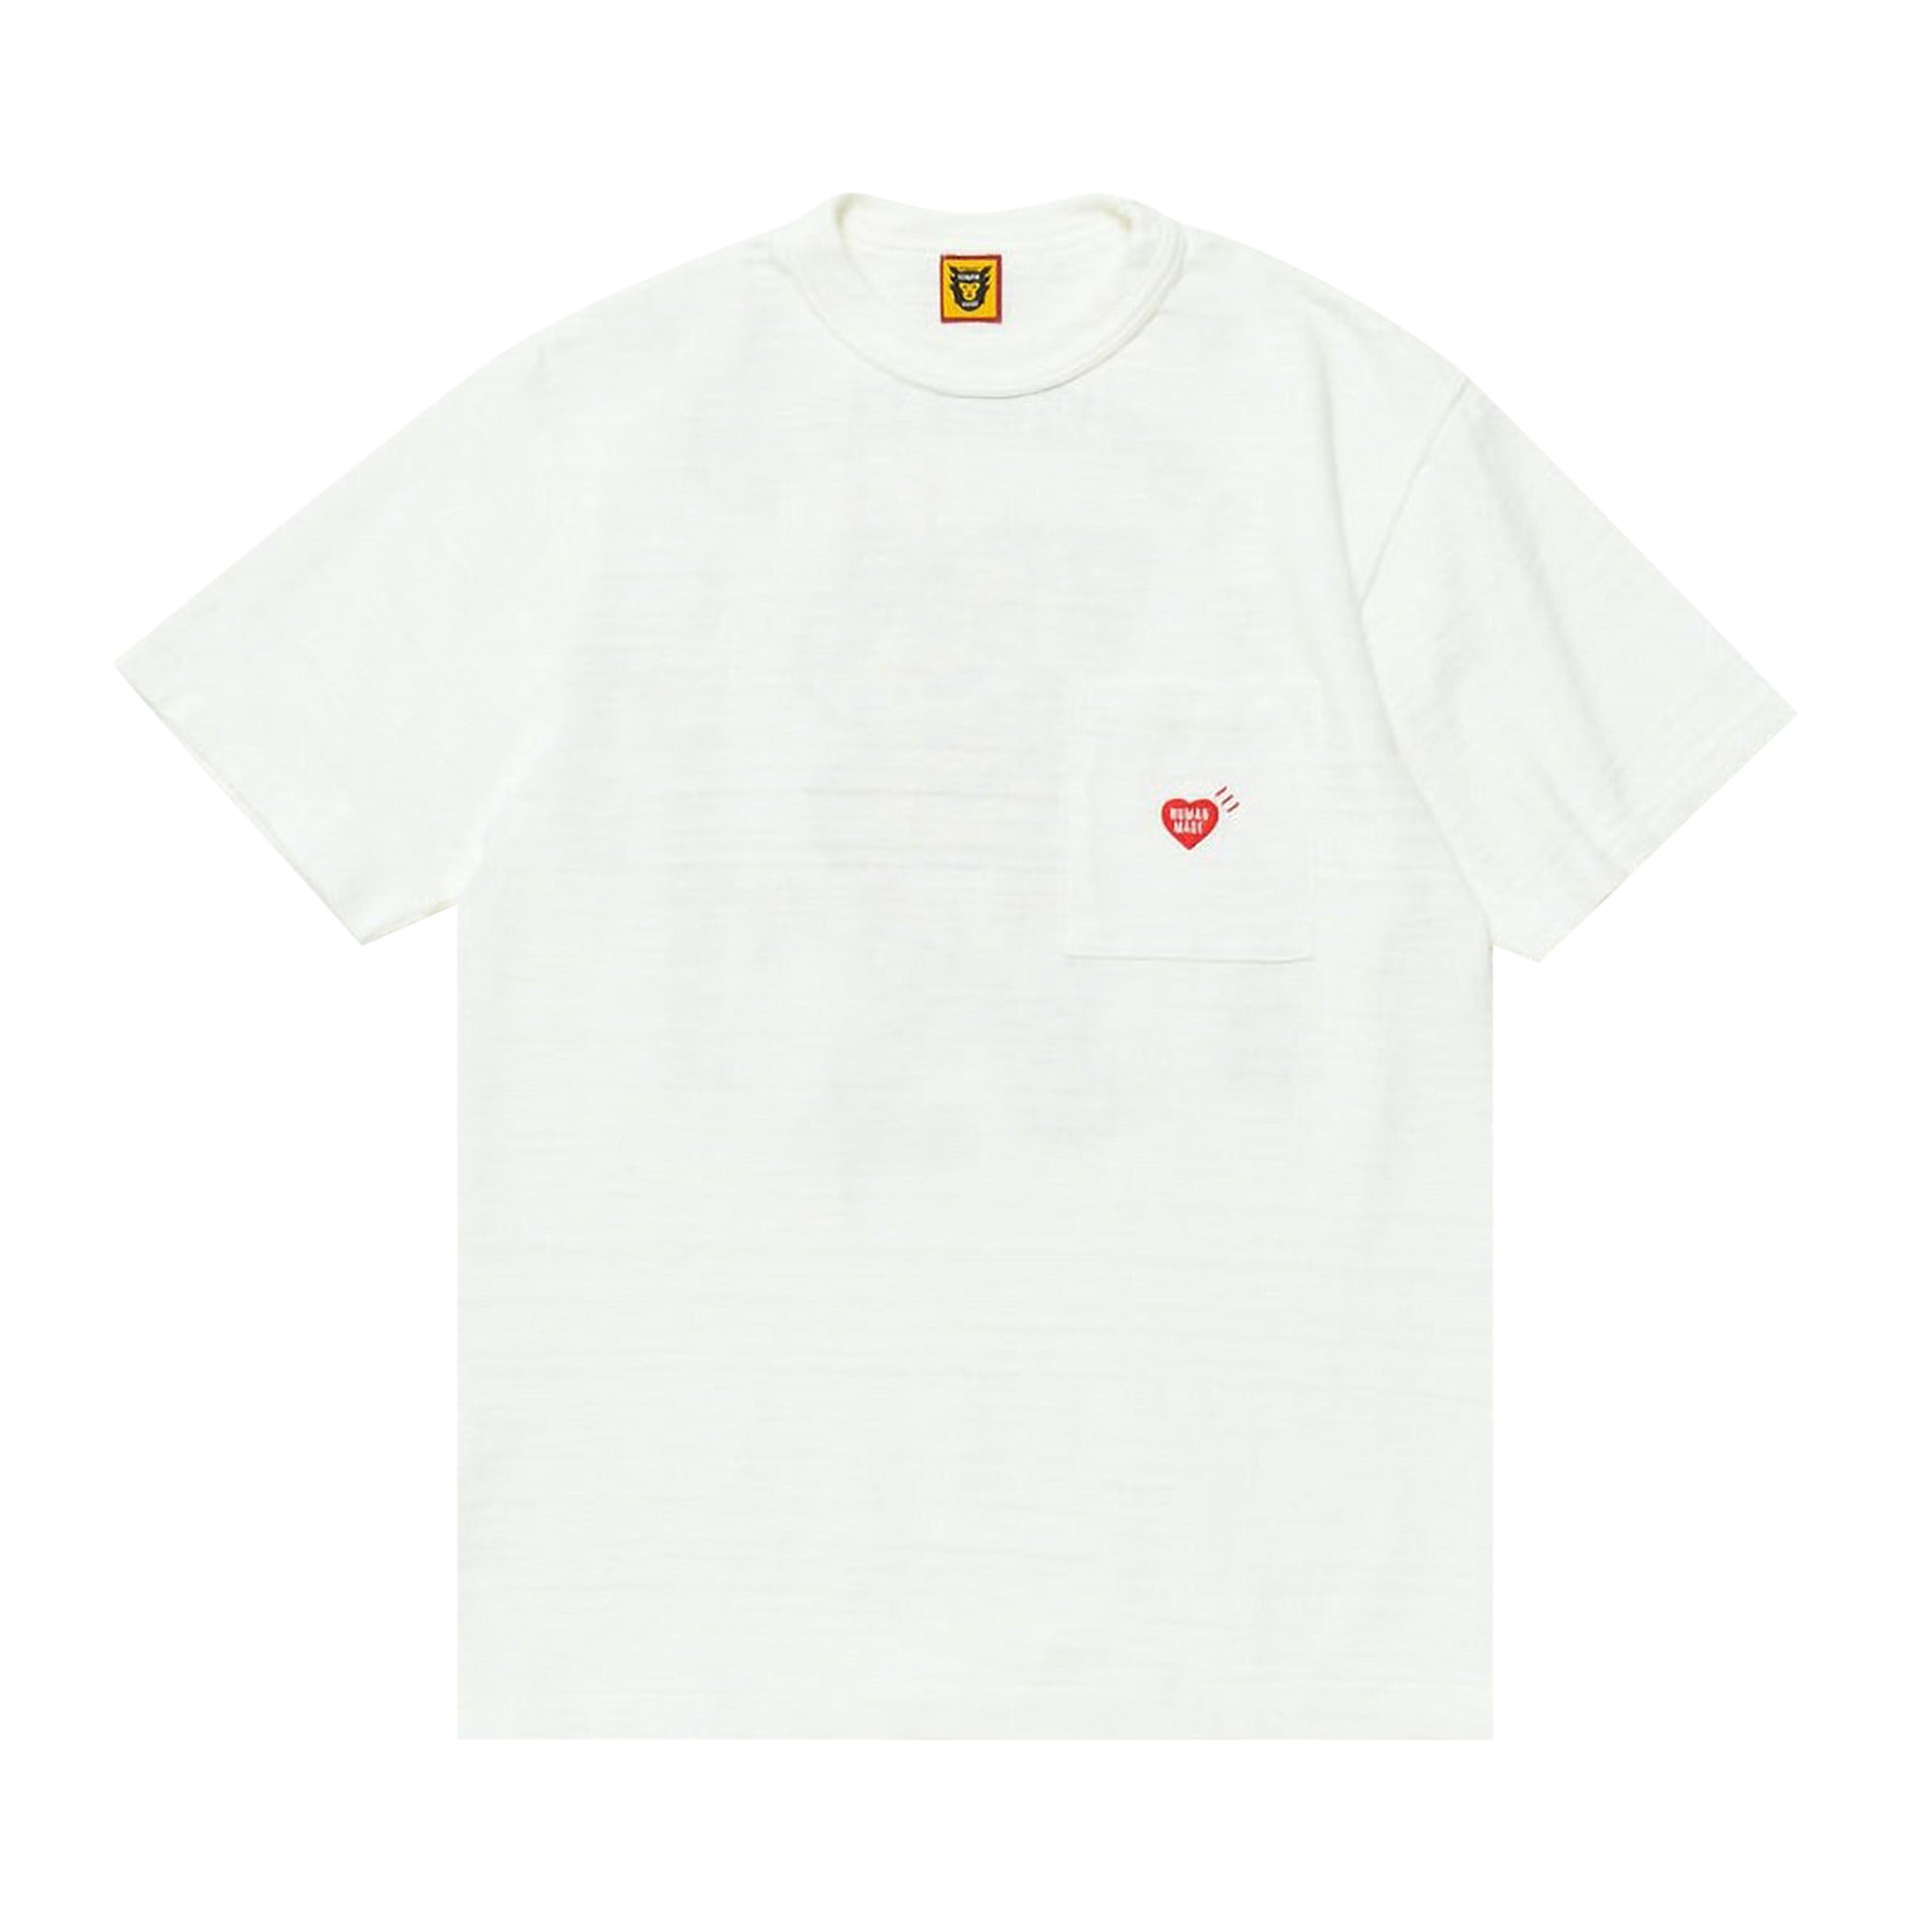 Buy Human Made Pocket T-Shirt #2 'White' - HM25CS041 WHIT | GOAT